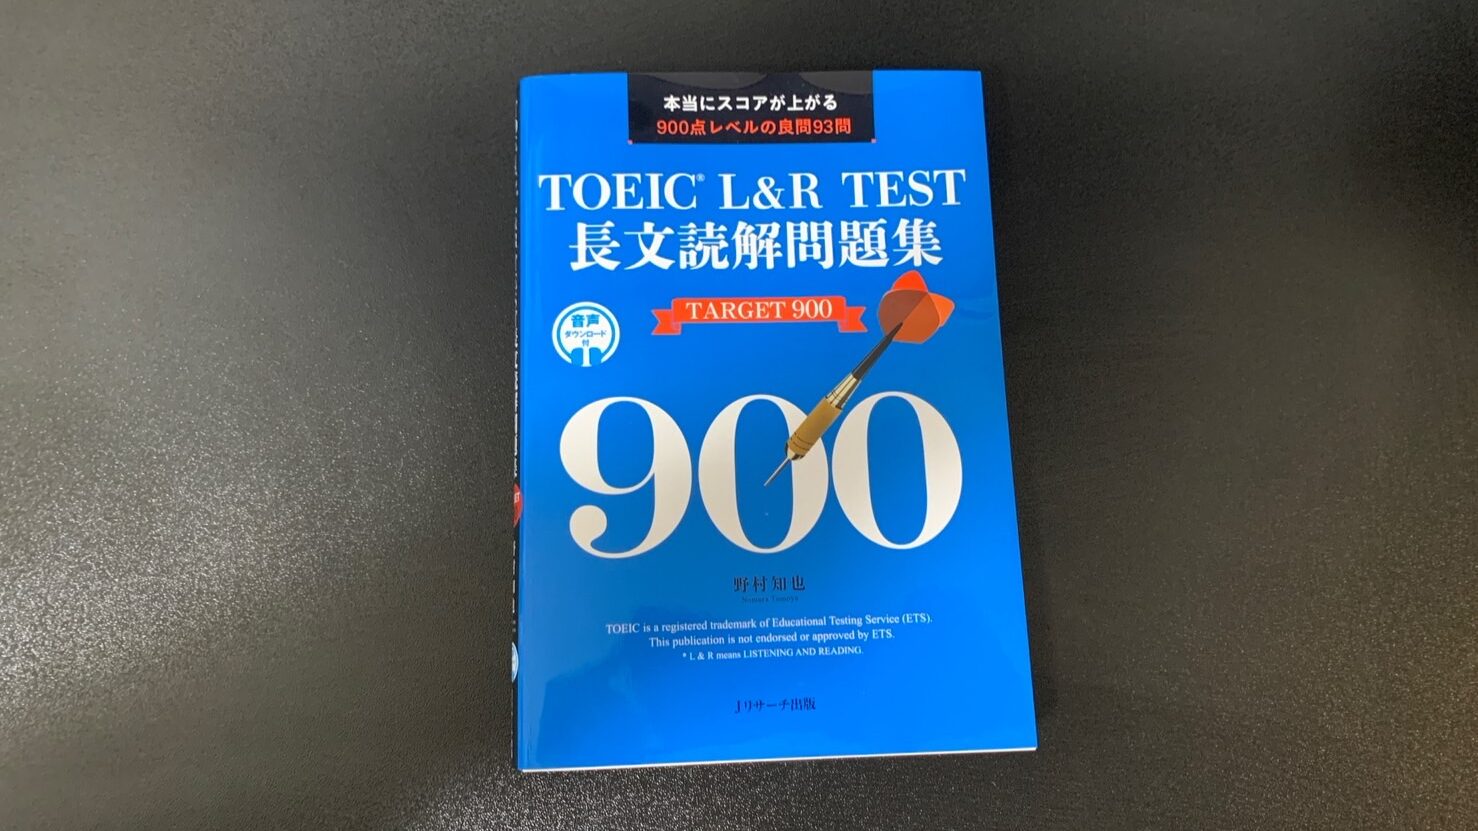 TOEIC L & R TEST 長文読解問題集 TARGET 900